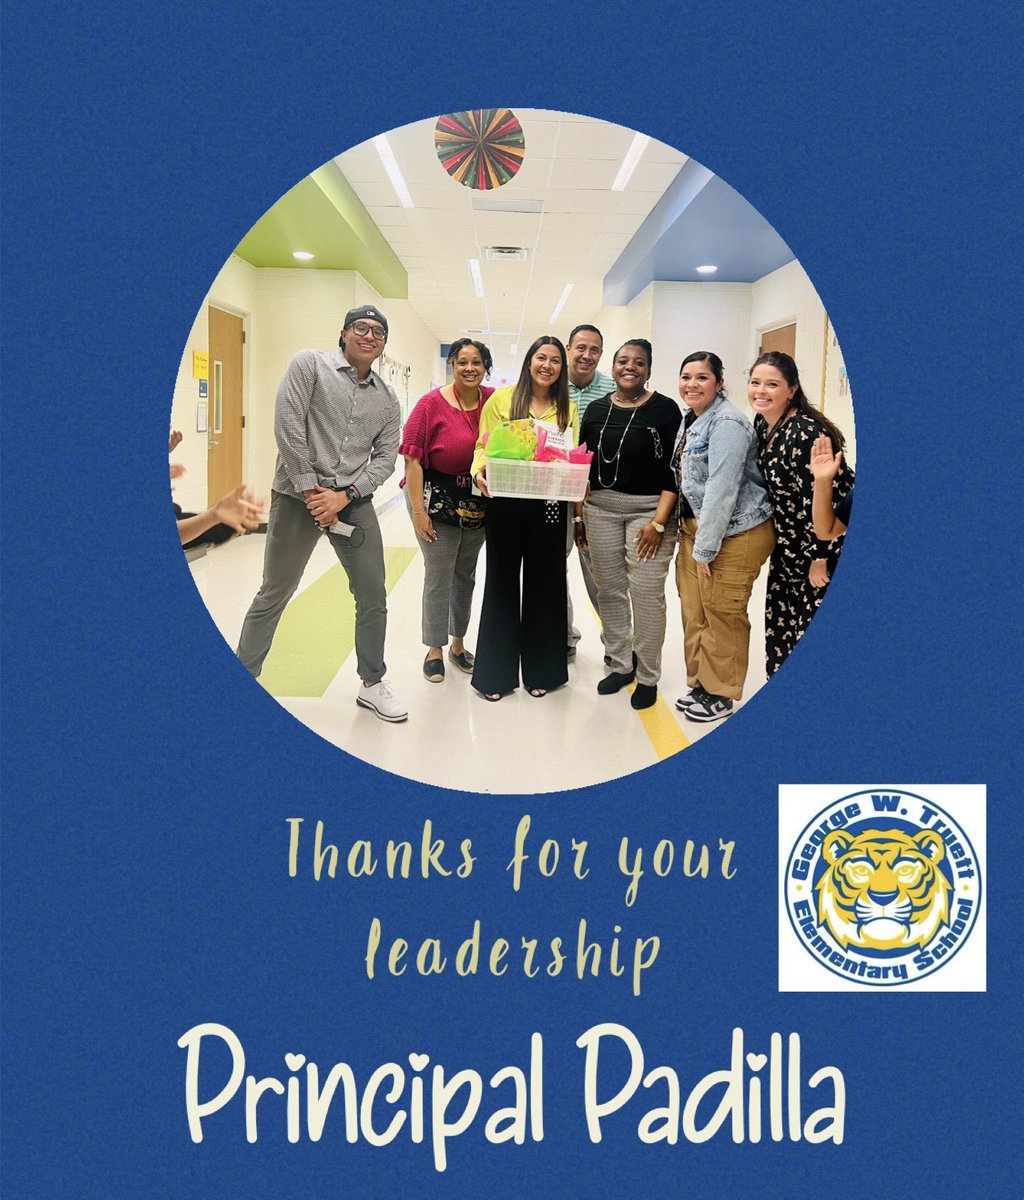 @Padilla_AA 
I appreciate your tireless efforts to improve our school & students’ academic success!

#happyprincipalsday